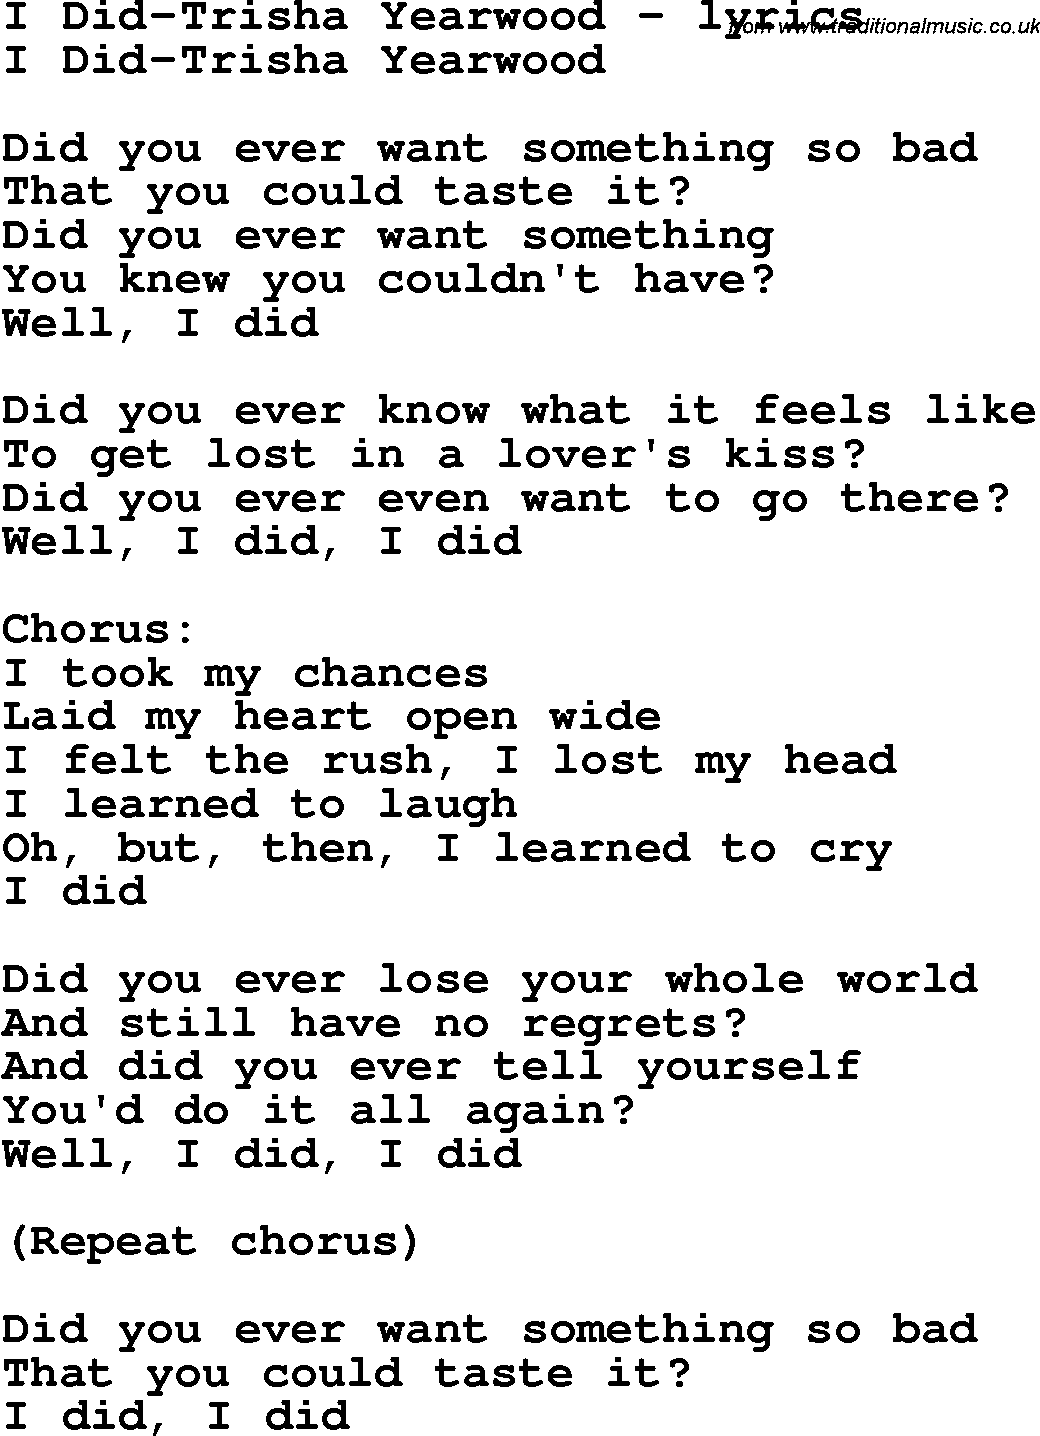 Love Song Lyrics for: I Did-Trisha Yearwood